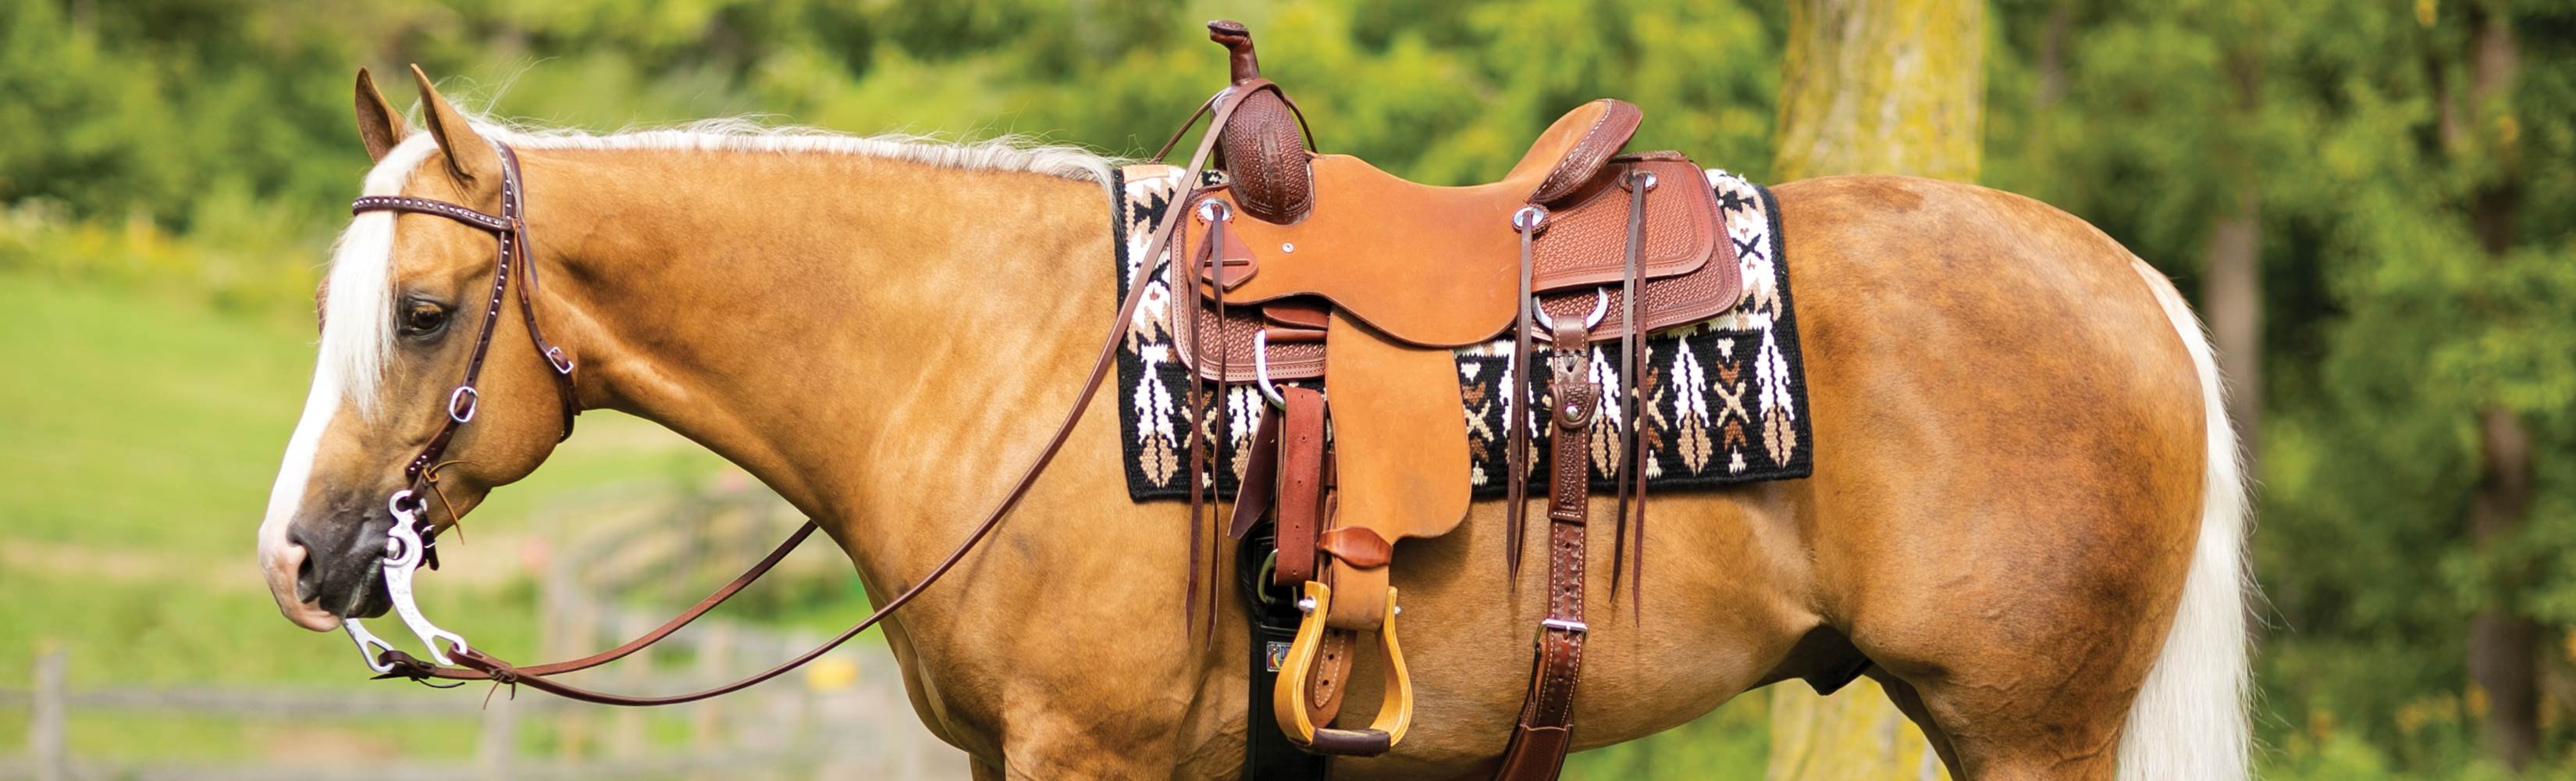 saddle-main-uses